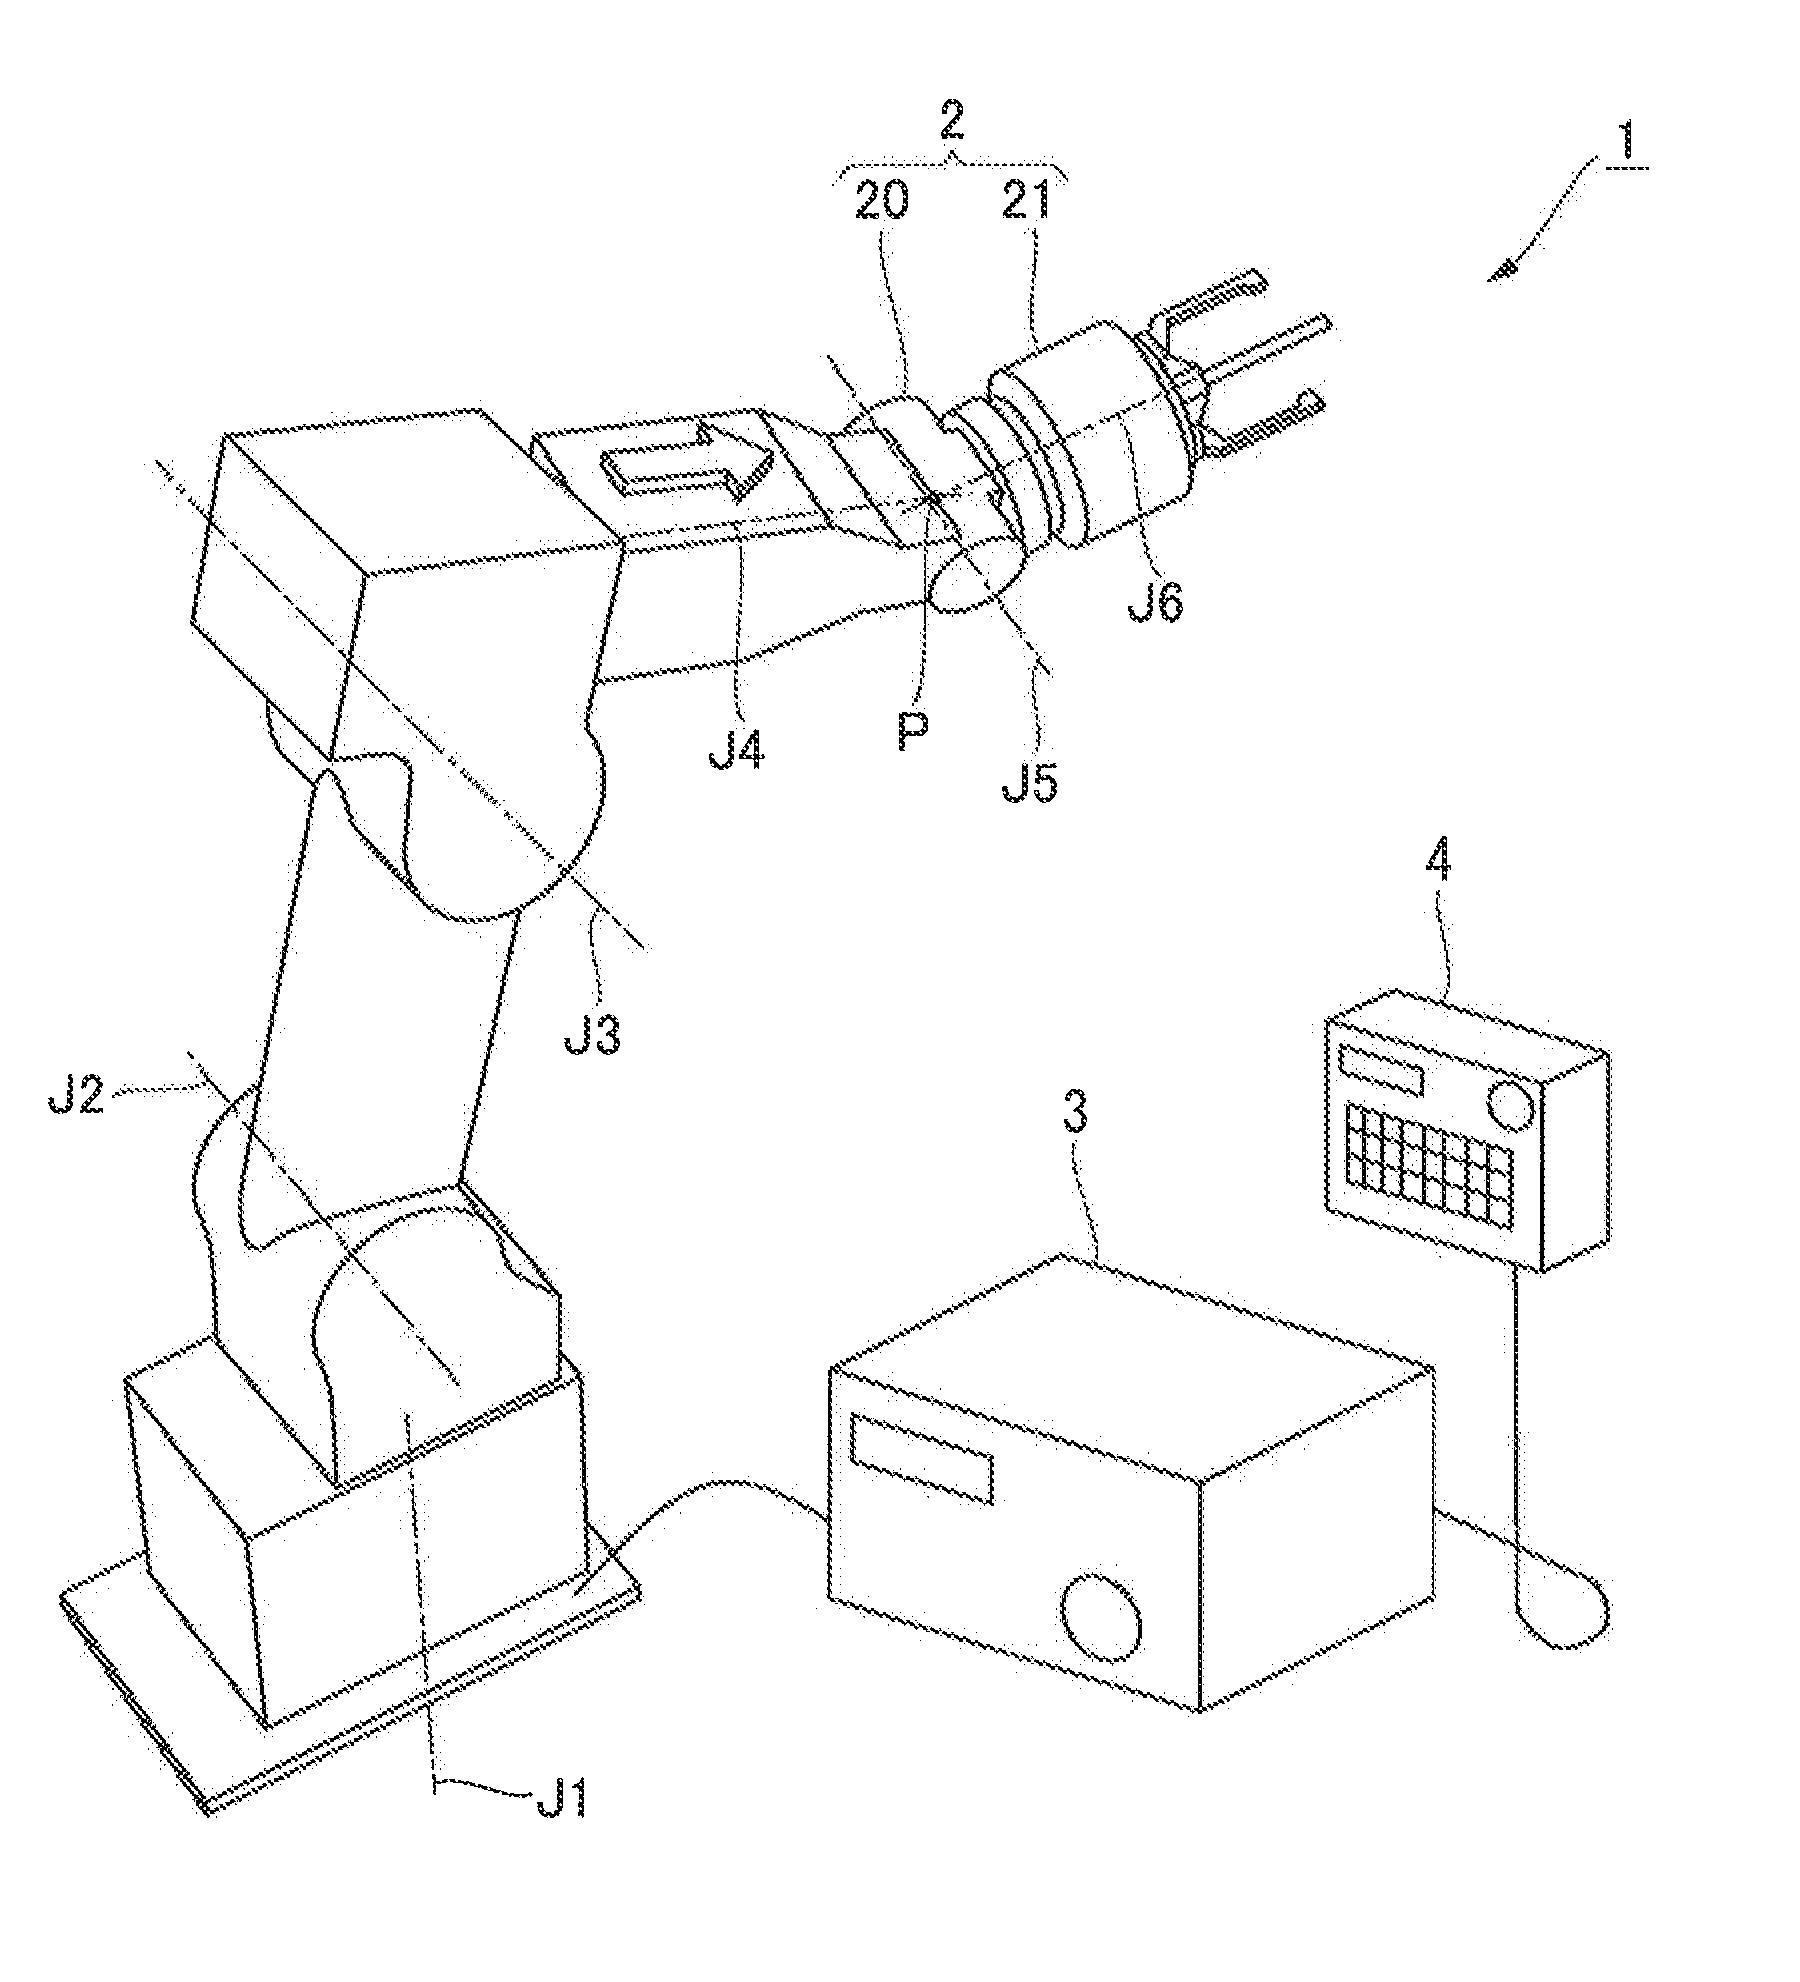 Robot apparatus and robot controlling method